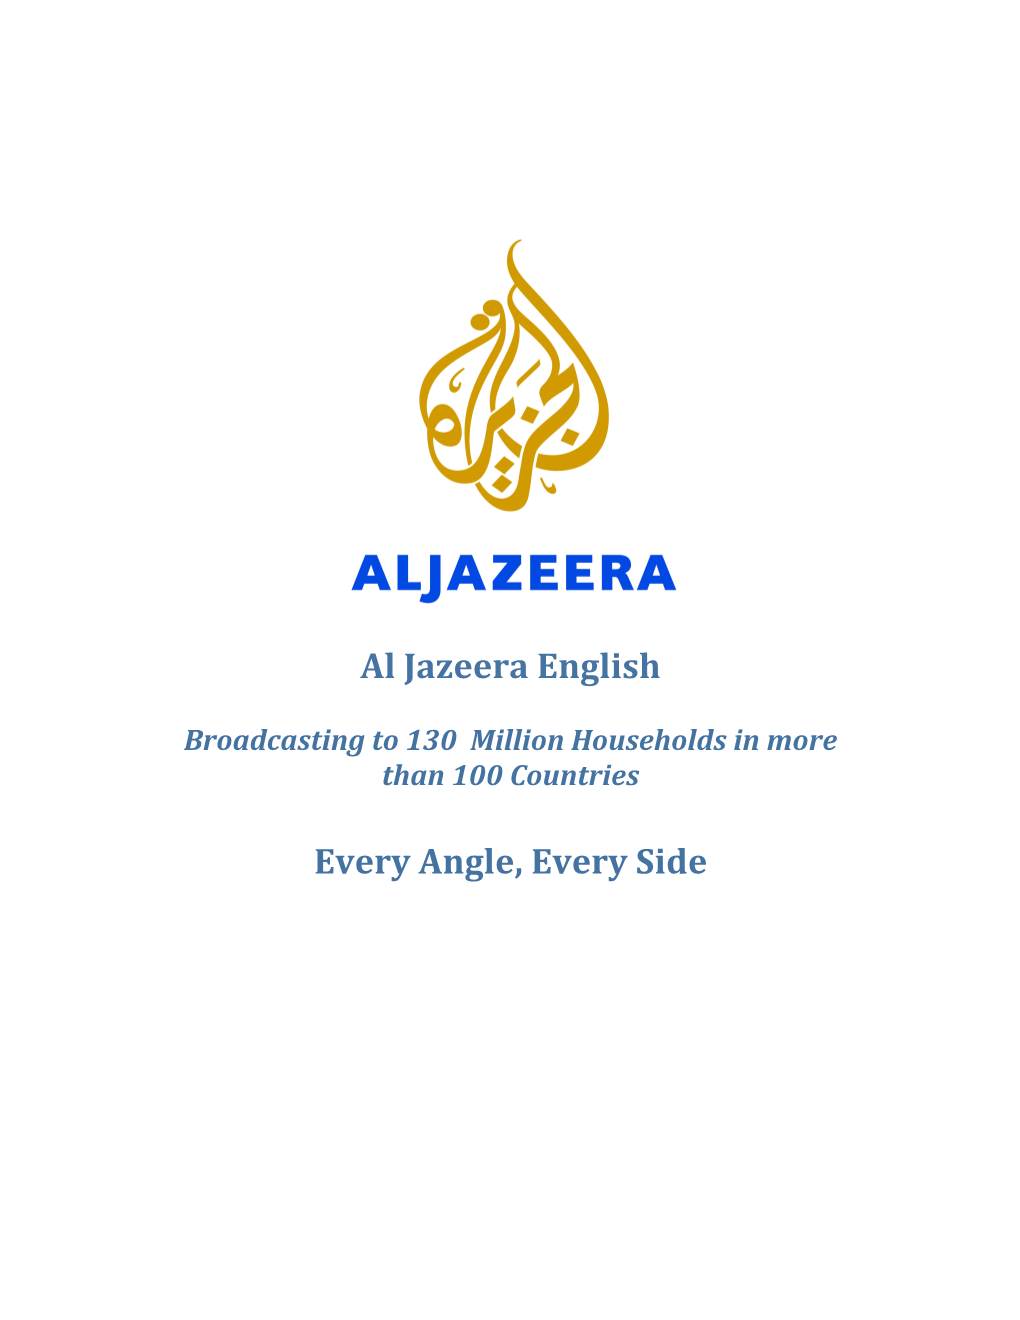 About Al Jazeera English